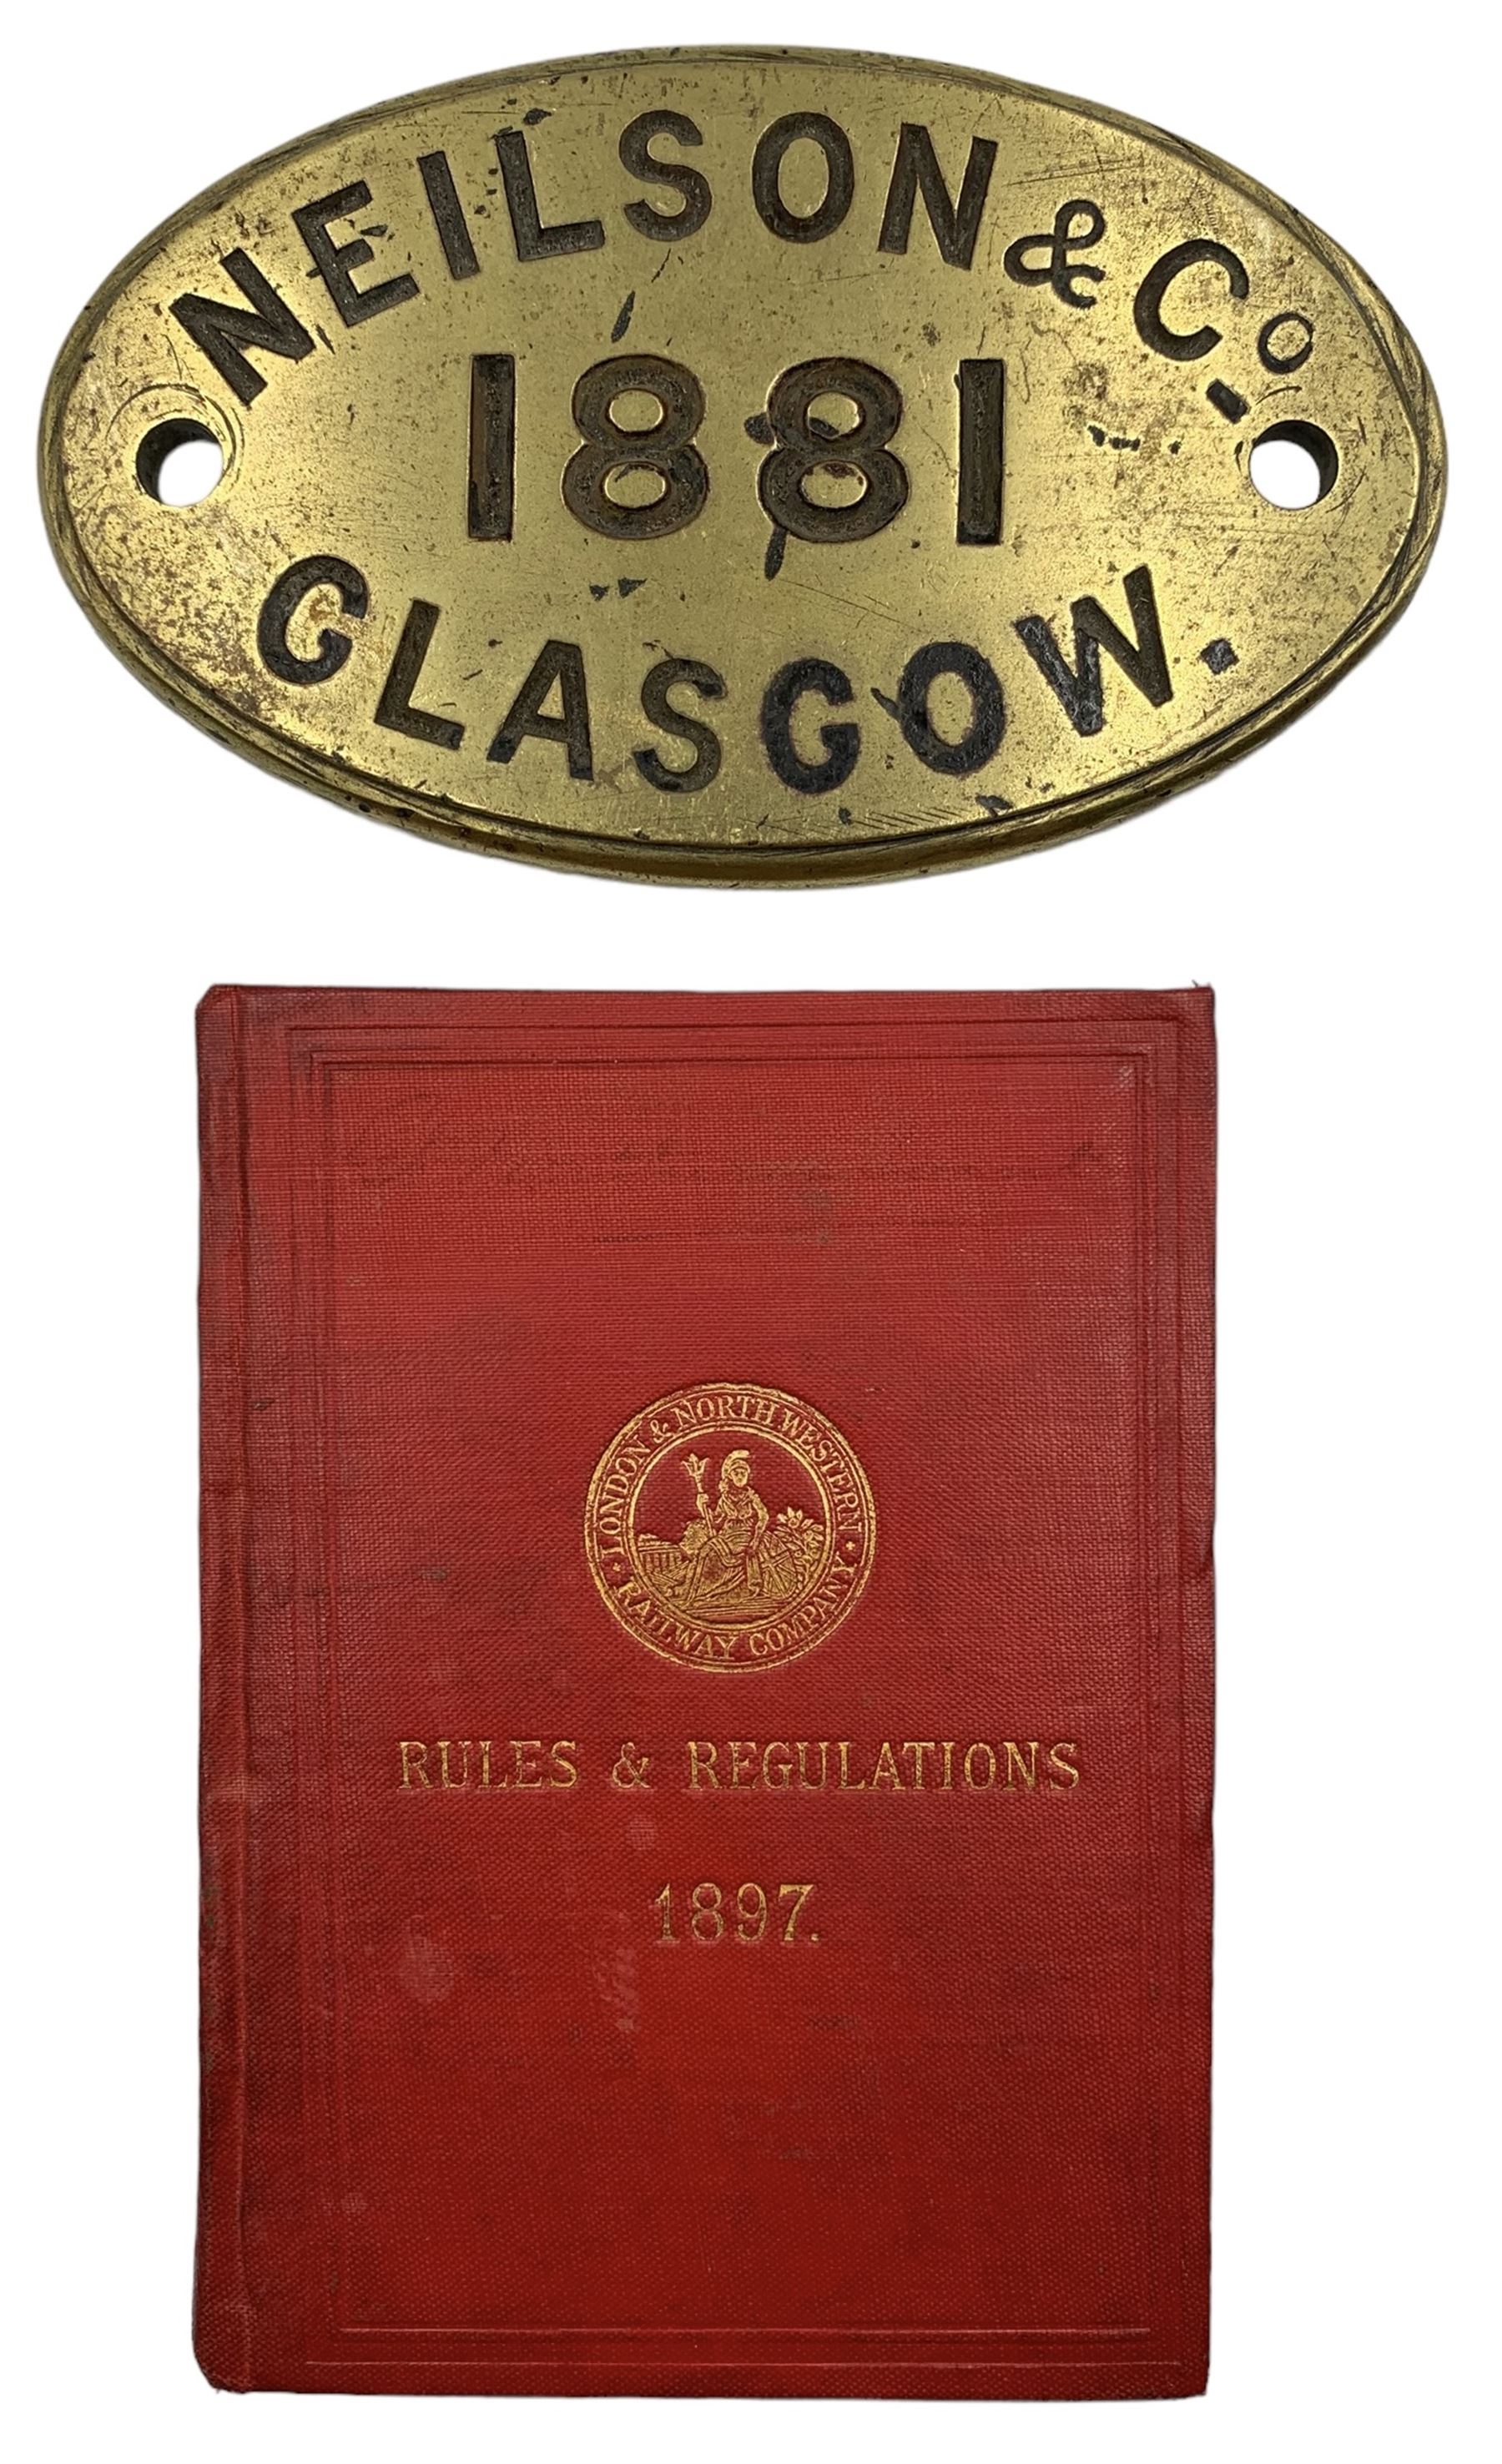 Brass oval railway worksplate inscribed Neilson & Co